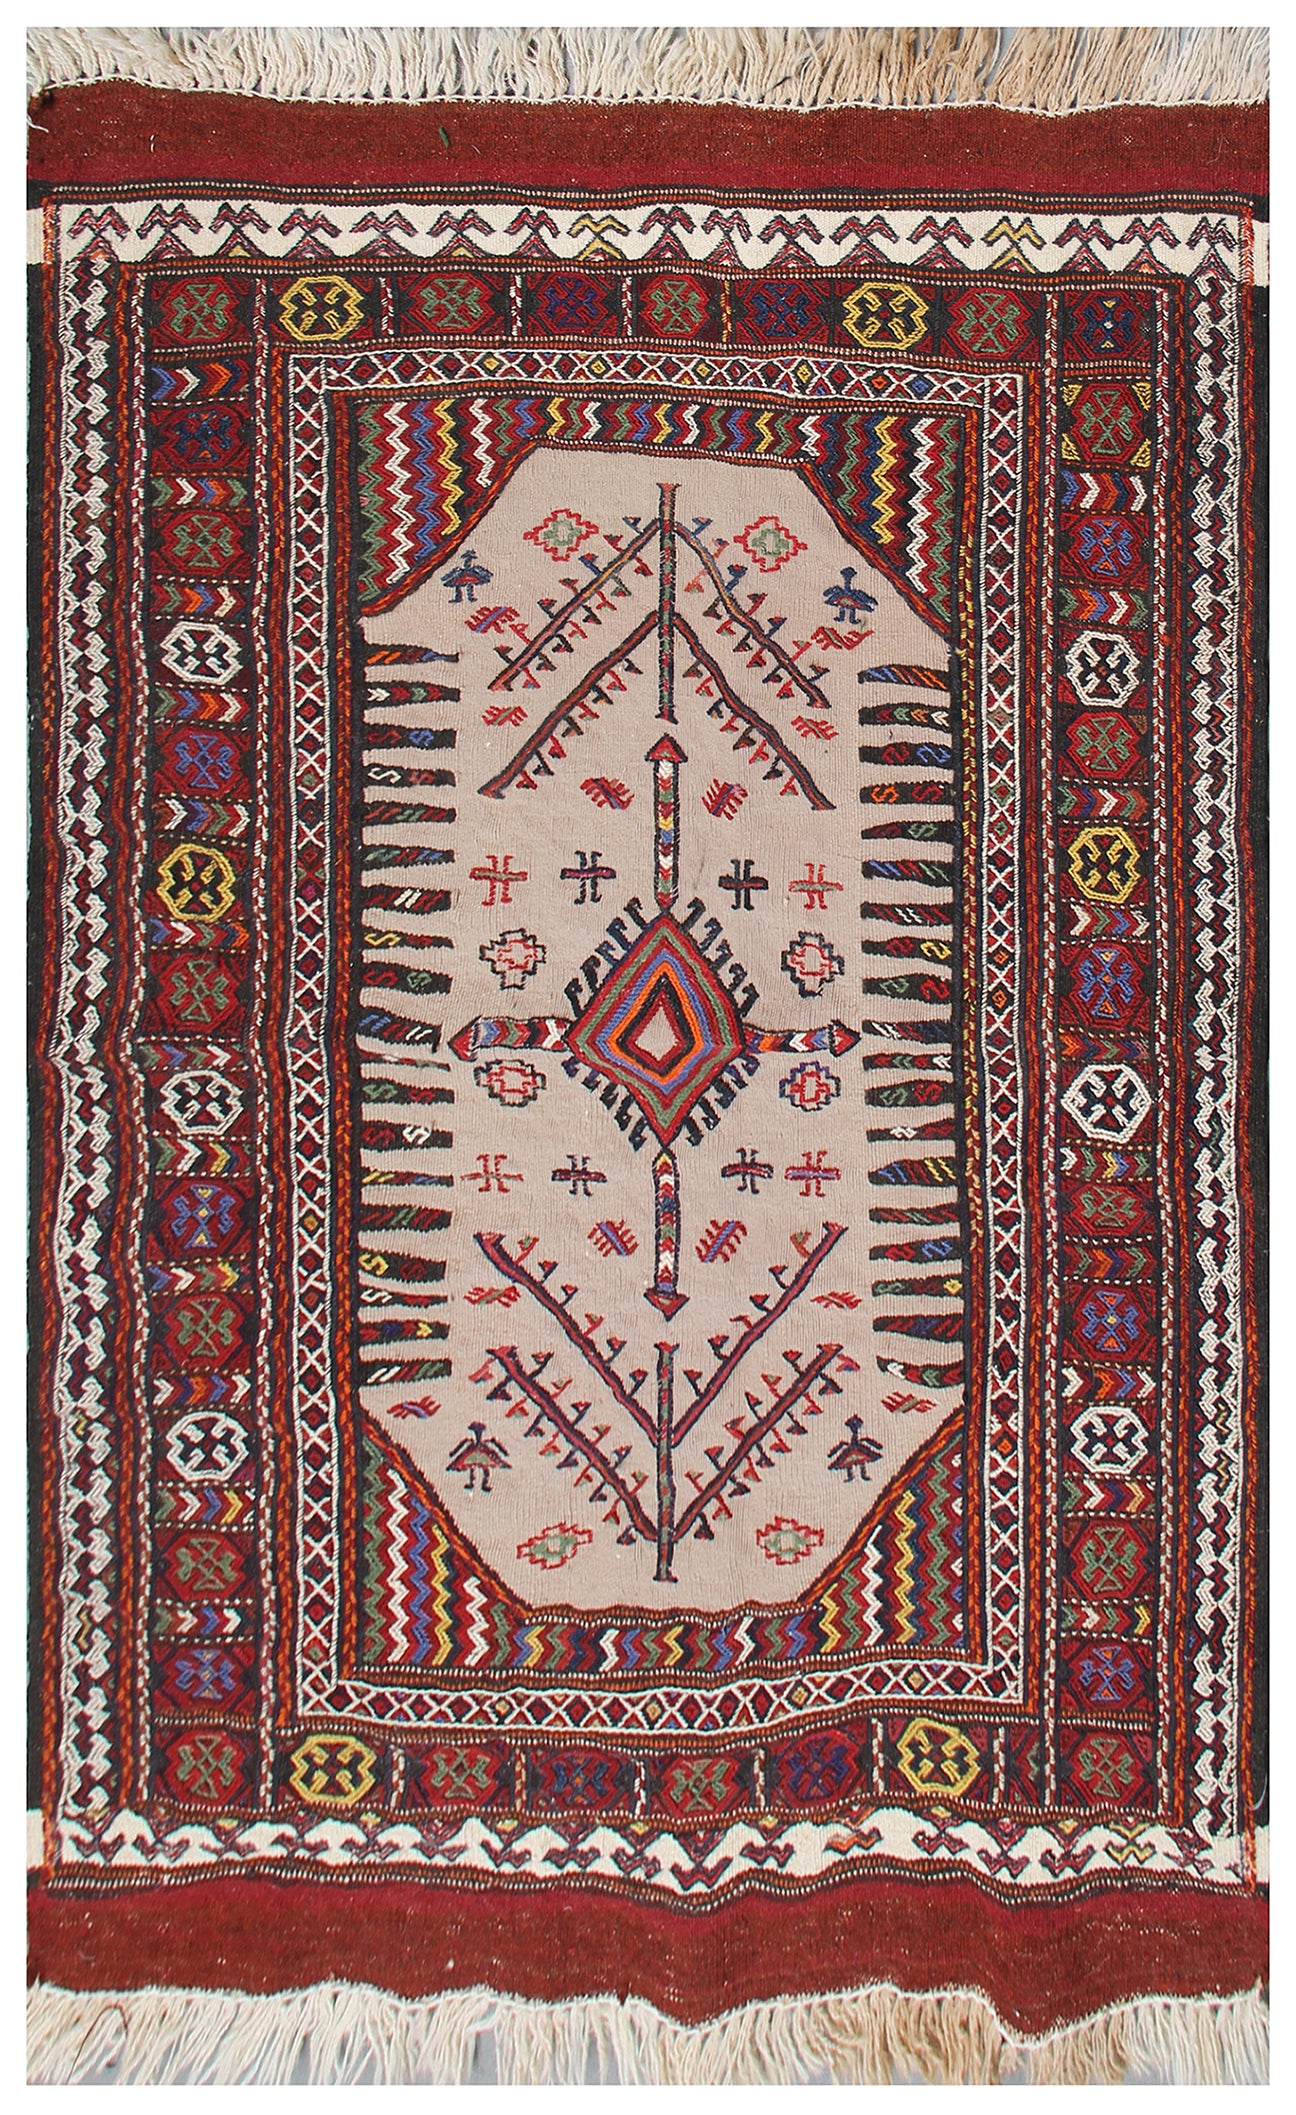 3'x4' Handwoven Embroidered Baluch Small Kilim Tribal Rug